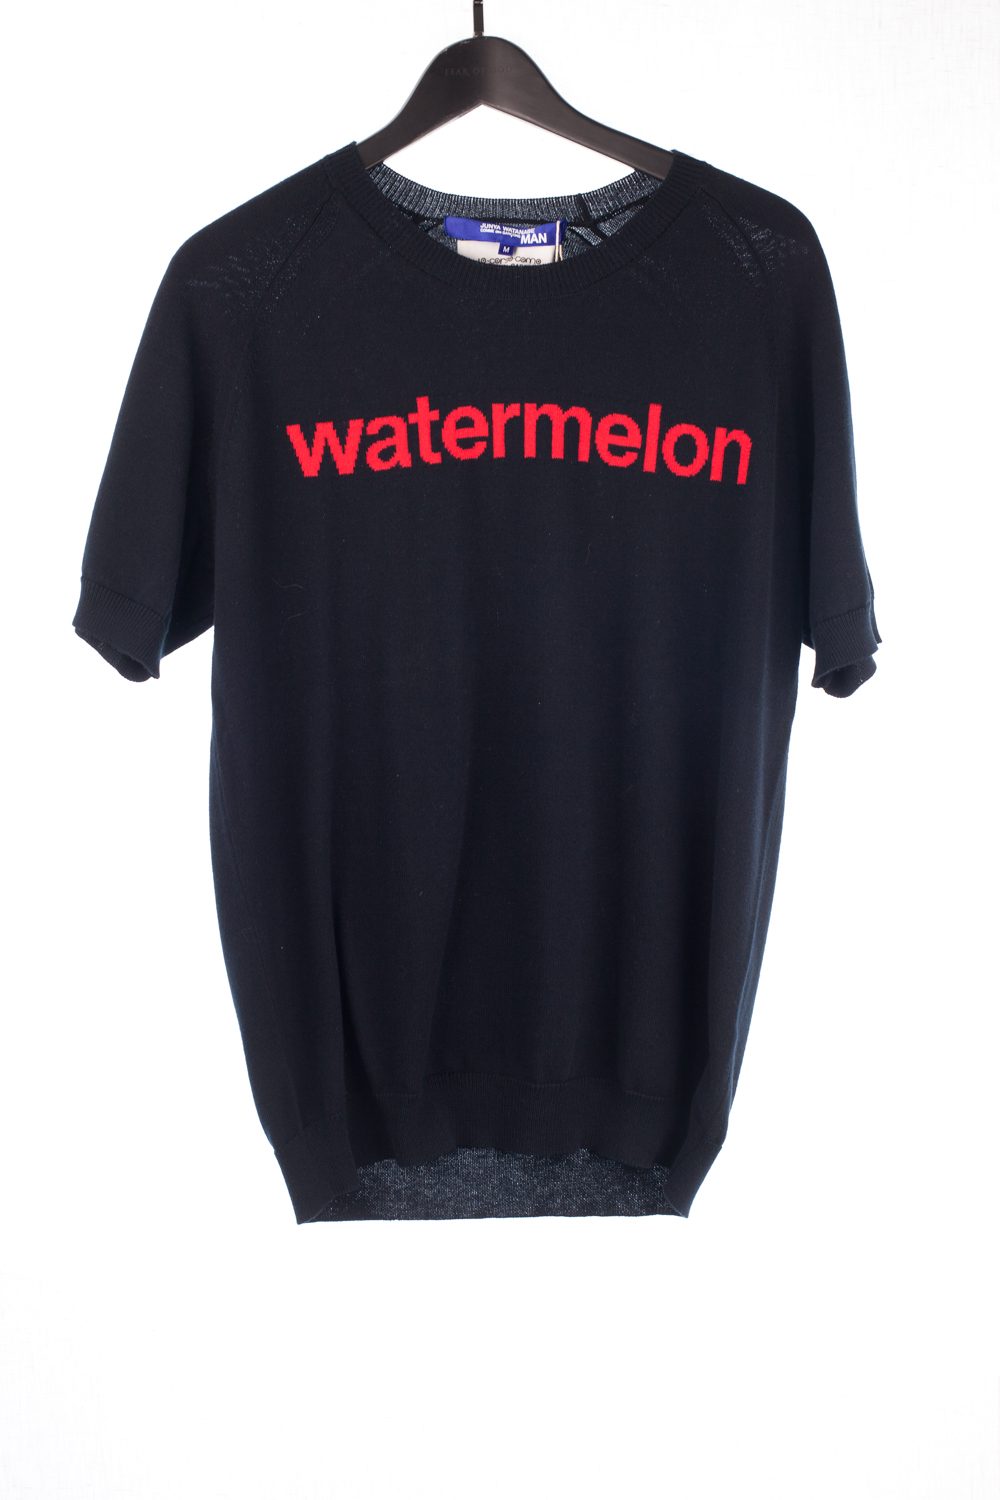 “Watermelon” Short Sleeved Sweater